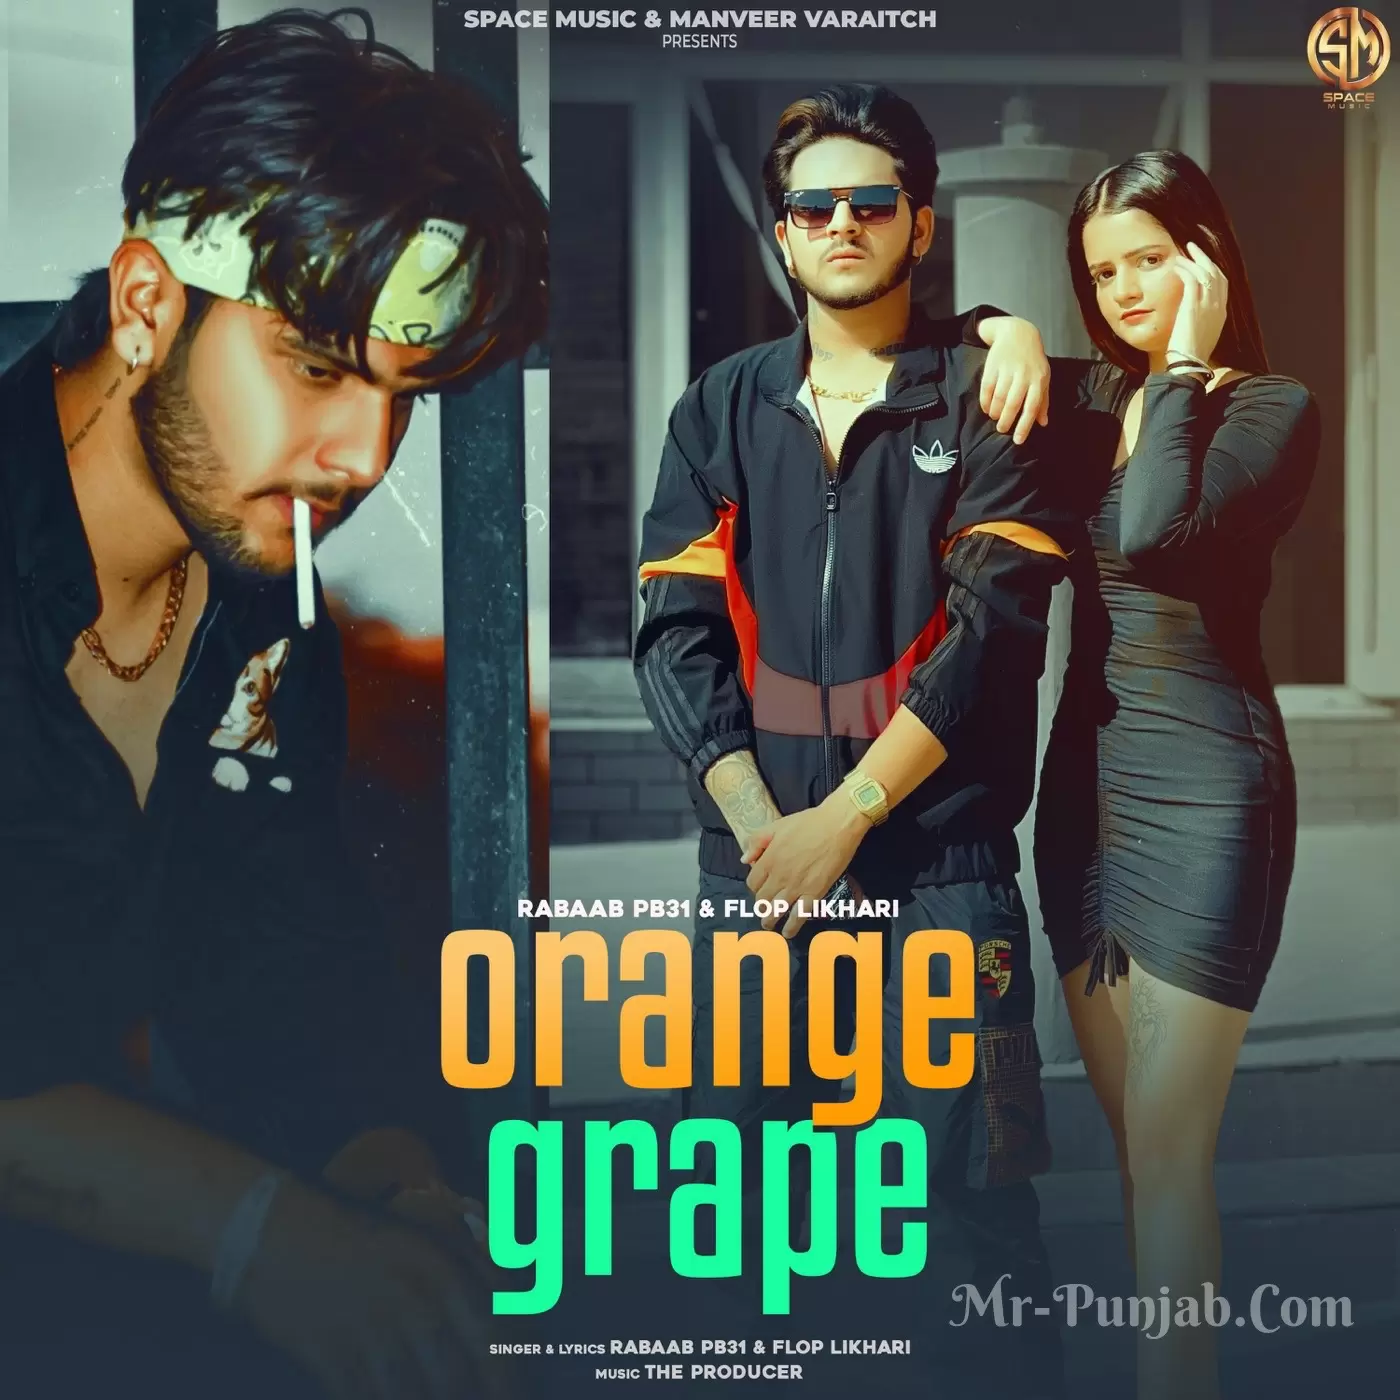 Orange Grape Rabaab Pb31 Mp3 Download Song - Mr-Punjab